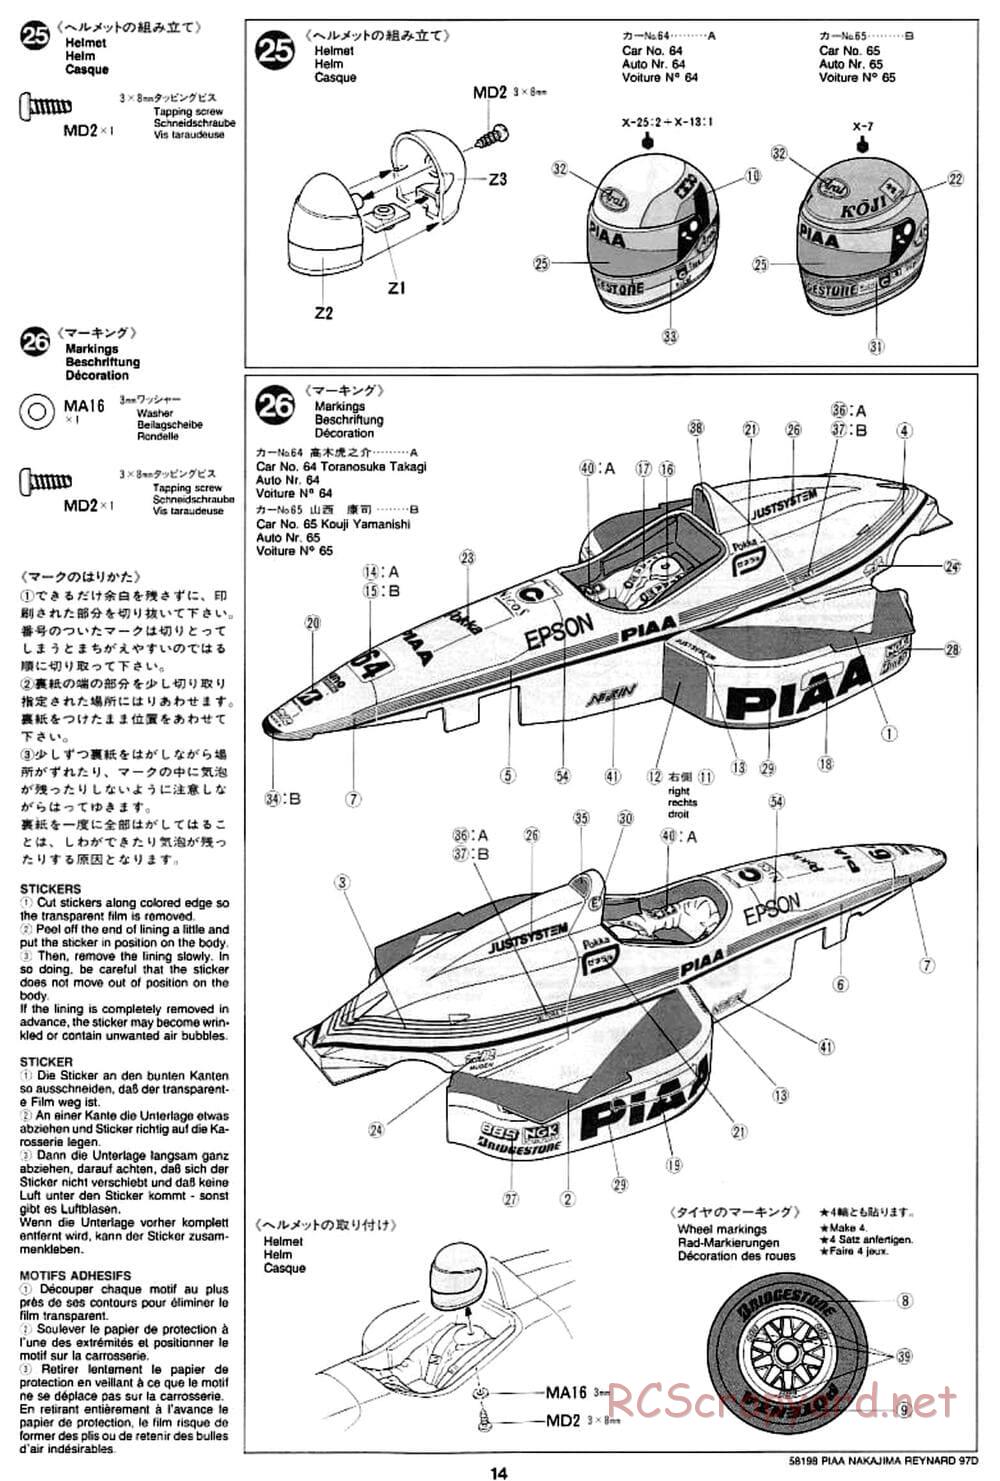 Tamiya - PIAA Nakajima Reynard 97D - F103 Chassis - Manuale - Page 14